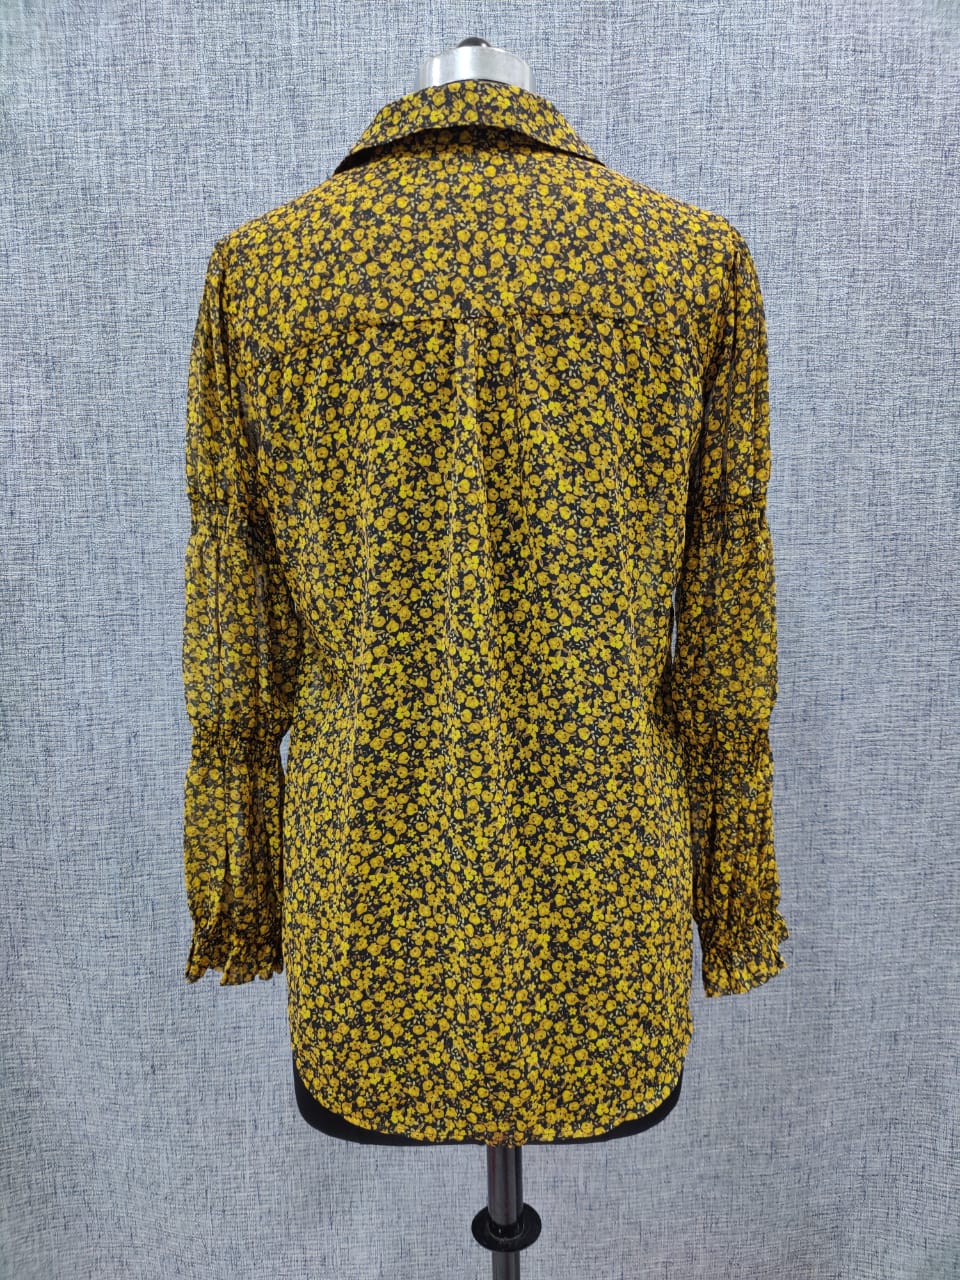 ZARA Yellow And Black Floral Print Sheer Lose Shirt | Relove